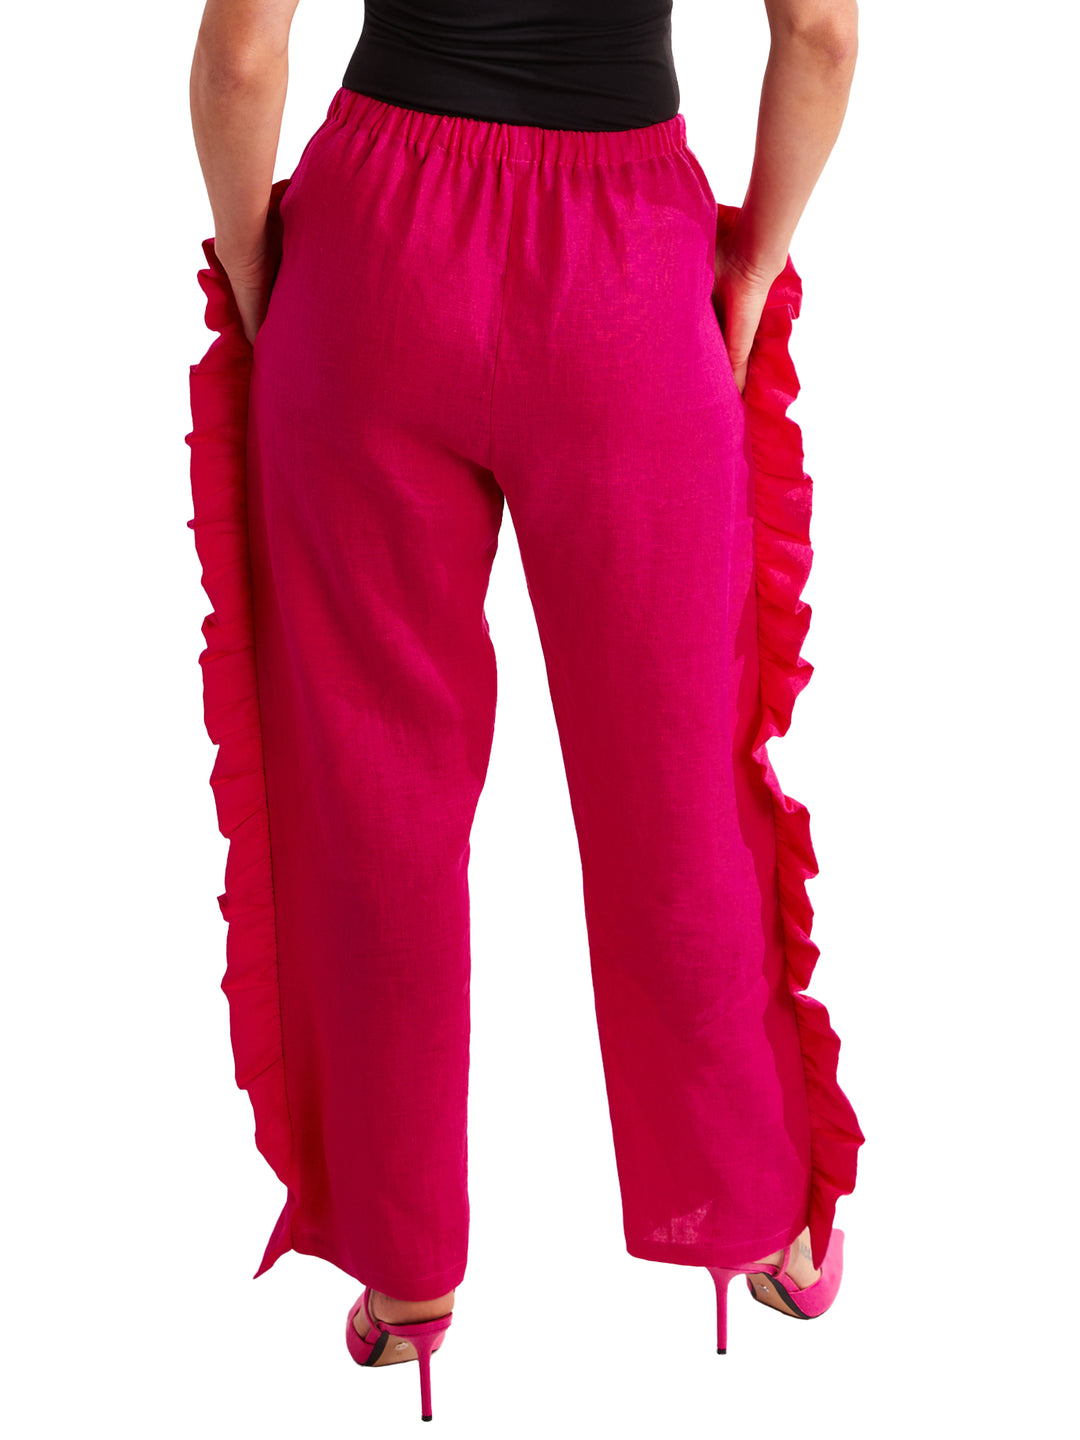 Ruffle Pants in Hot Pink Linen